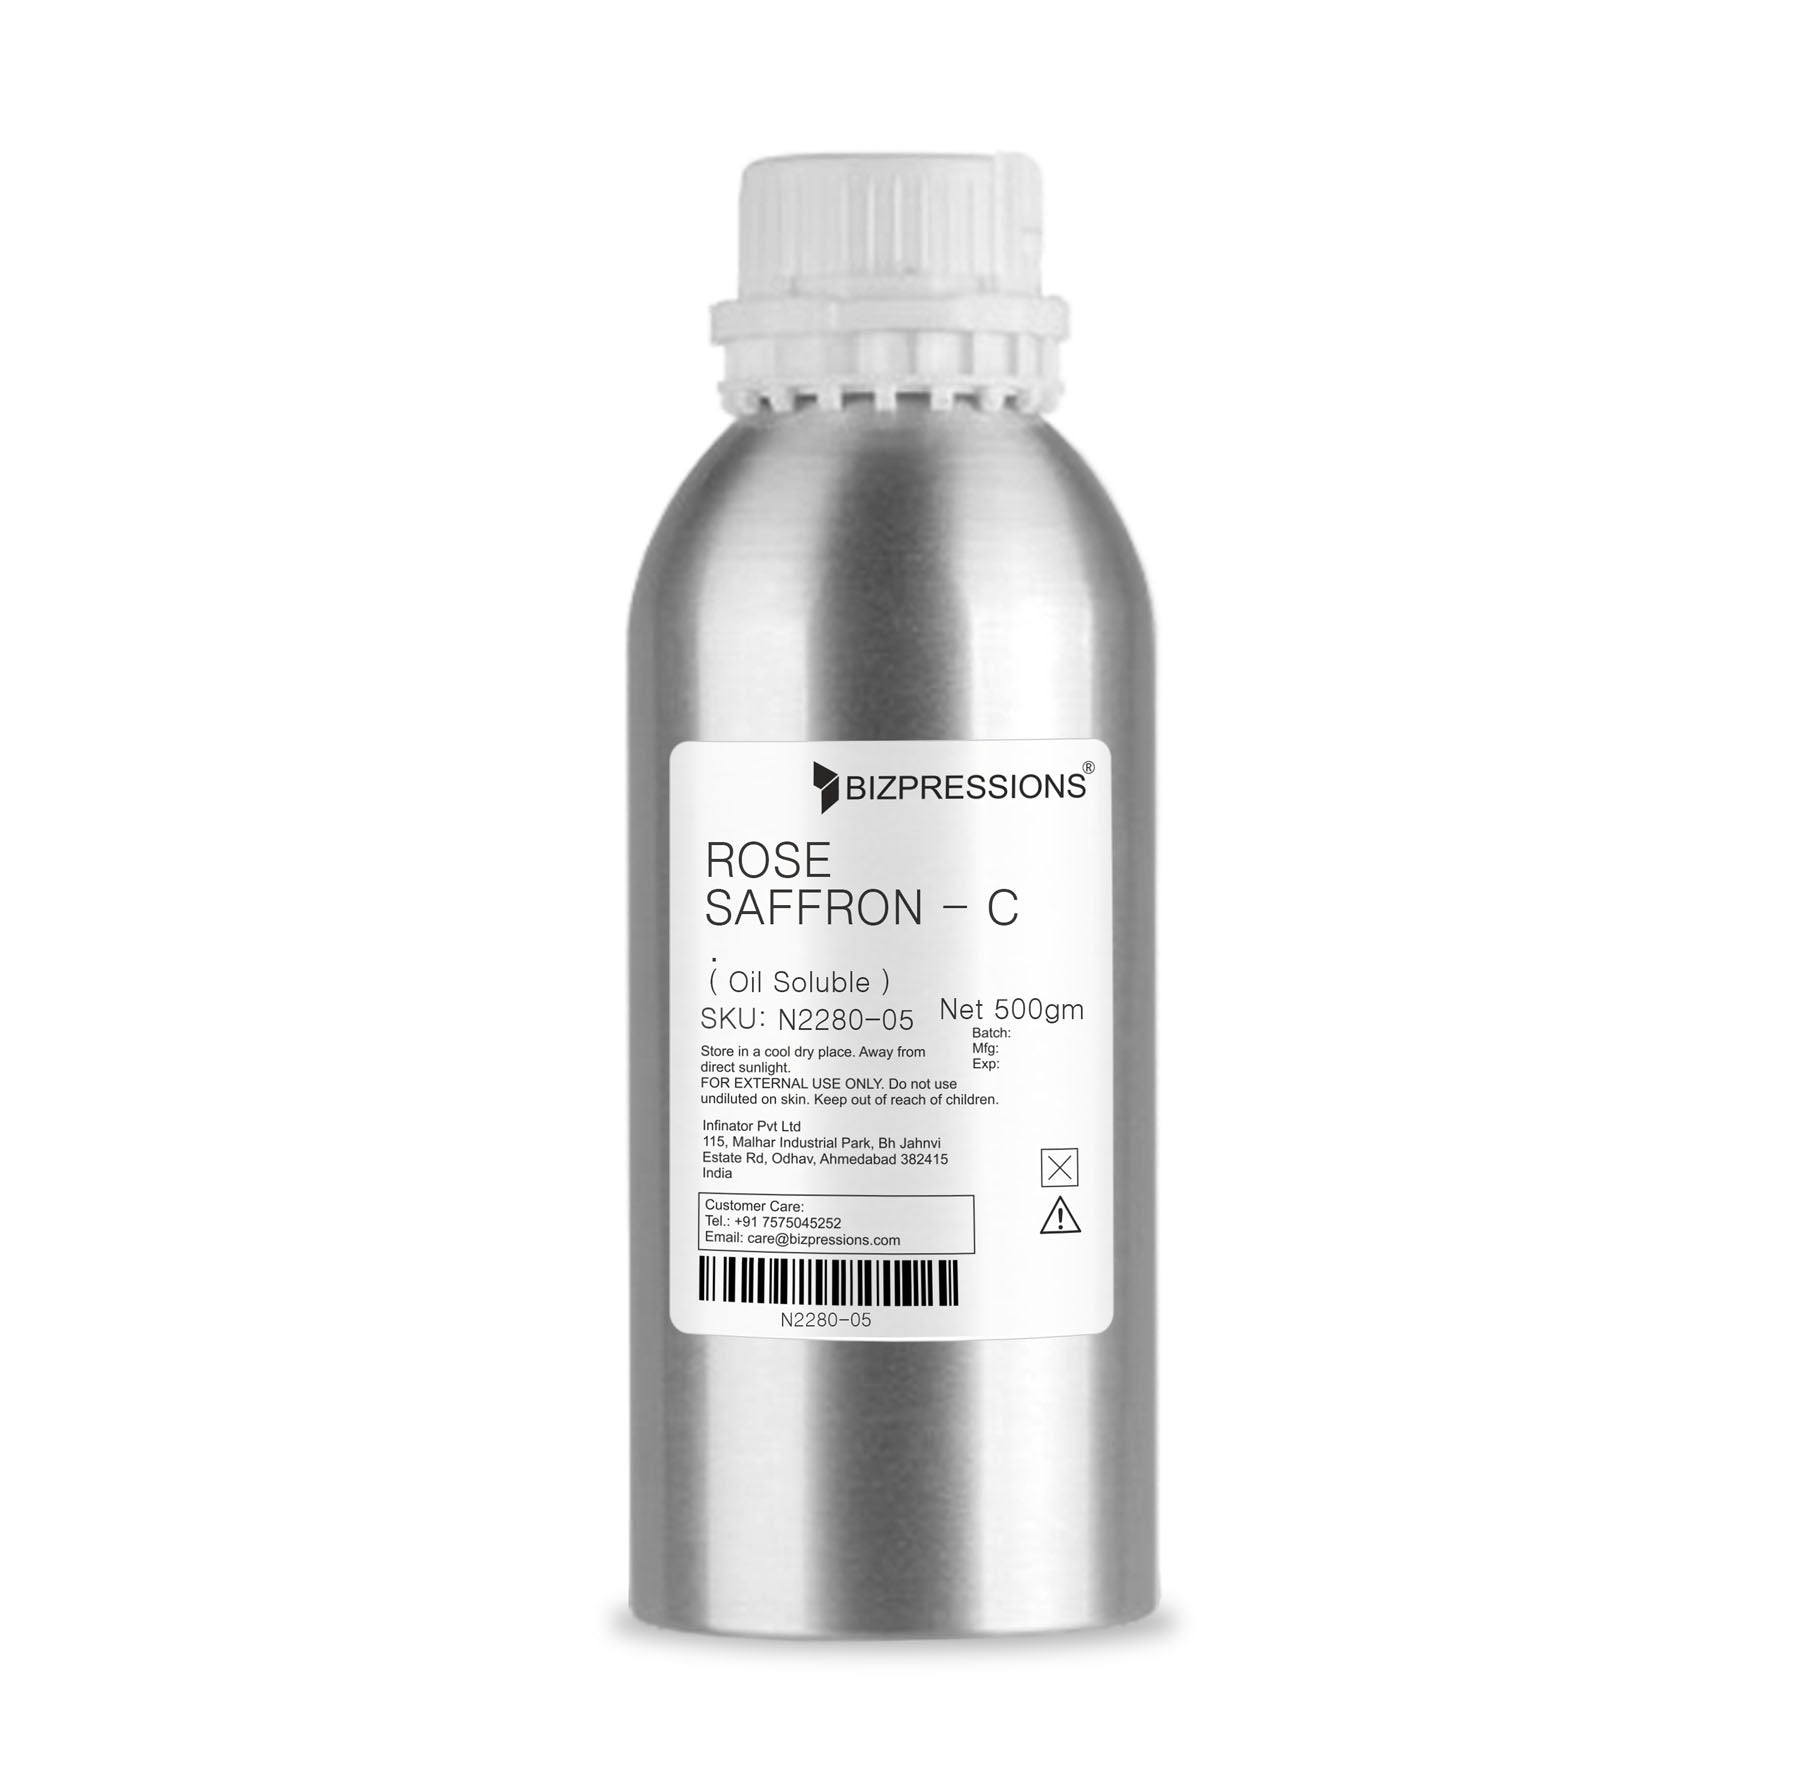 ROSE SAFFRON - C - Fragrance ( Oil Soluble ) - 500 gm